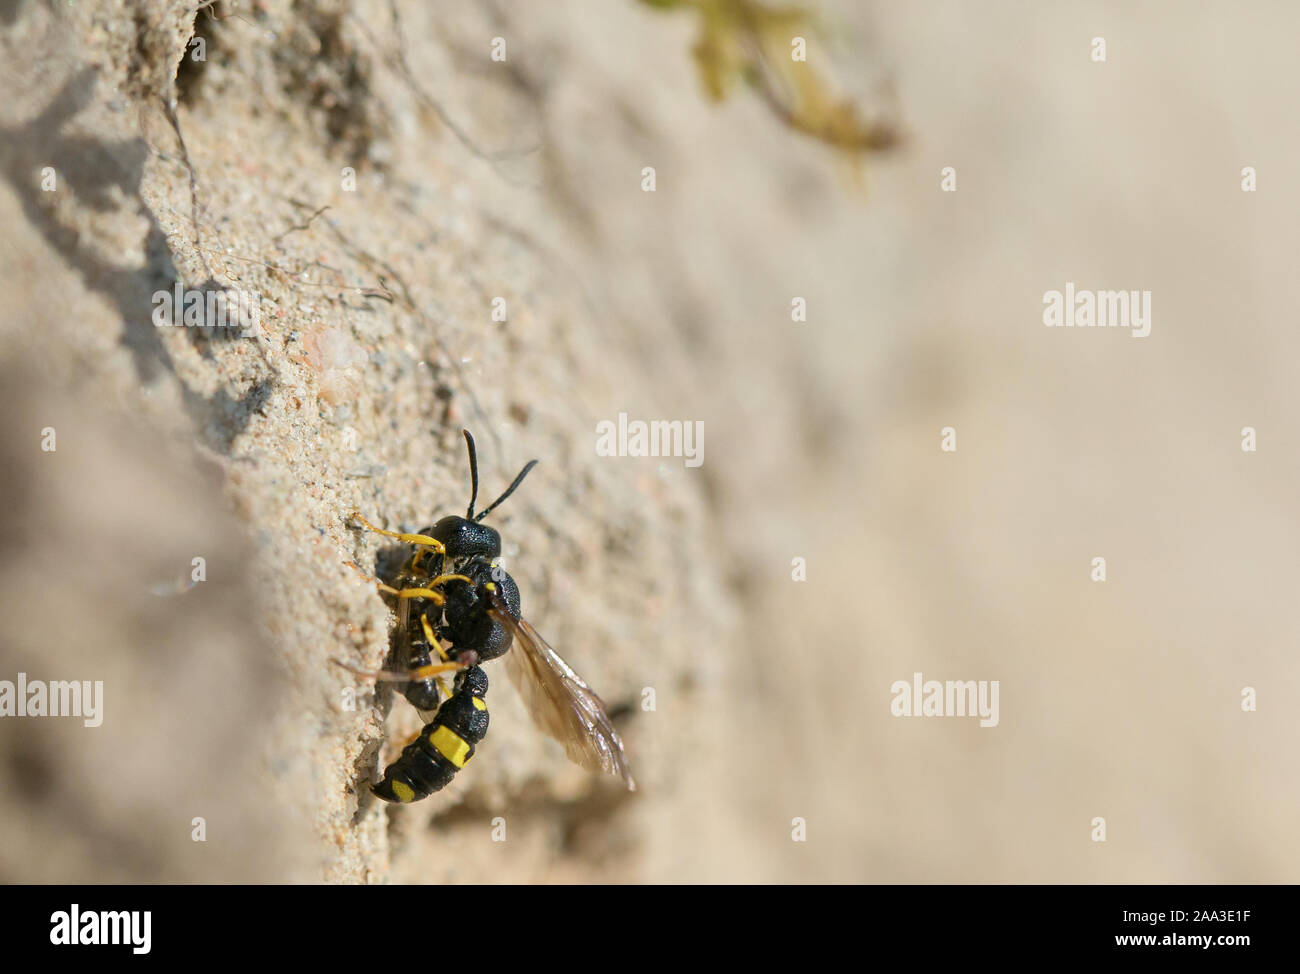 Ornamentada-tailed digger-avispa con una abeja solitaria como presa Foto de stock